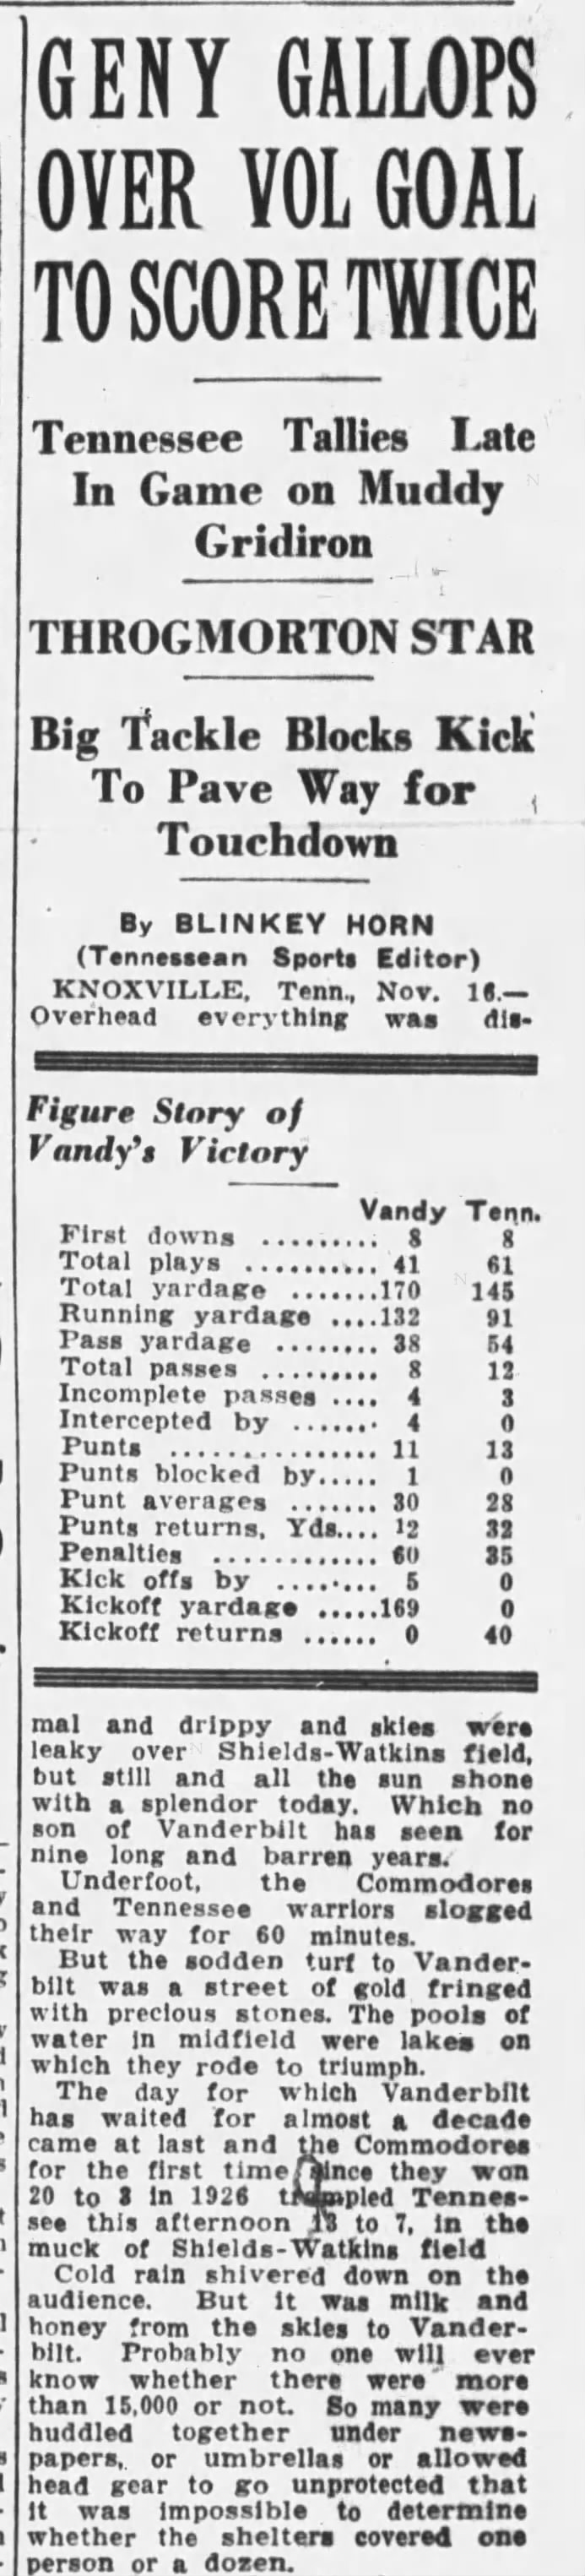 1935-11-16 Vanderbilt at Tennessee - Part 3